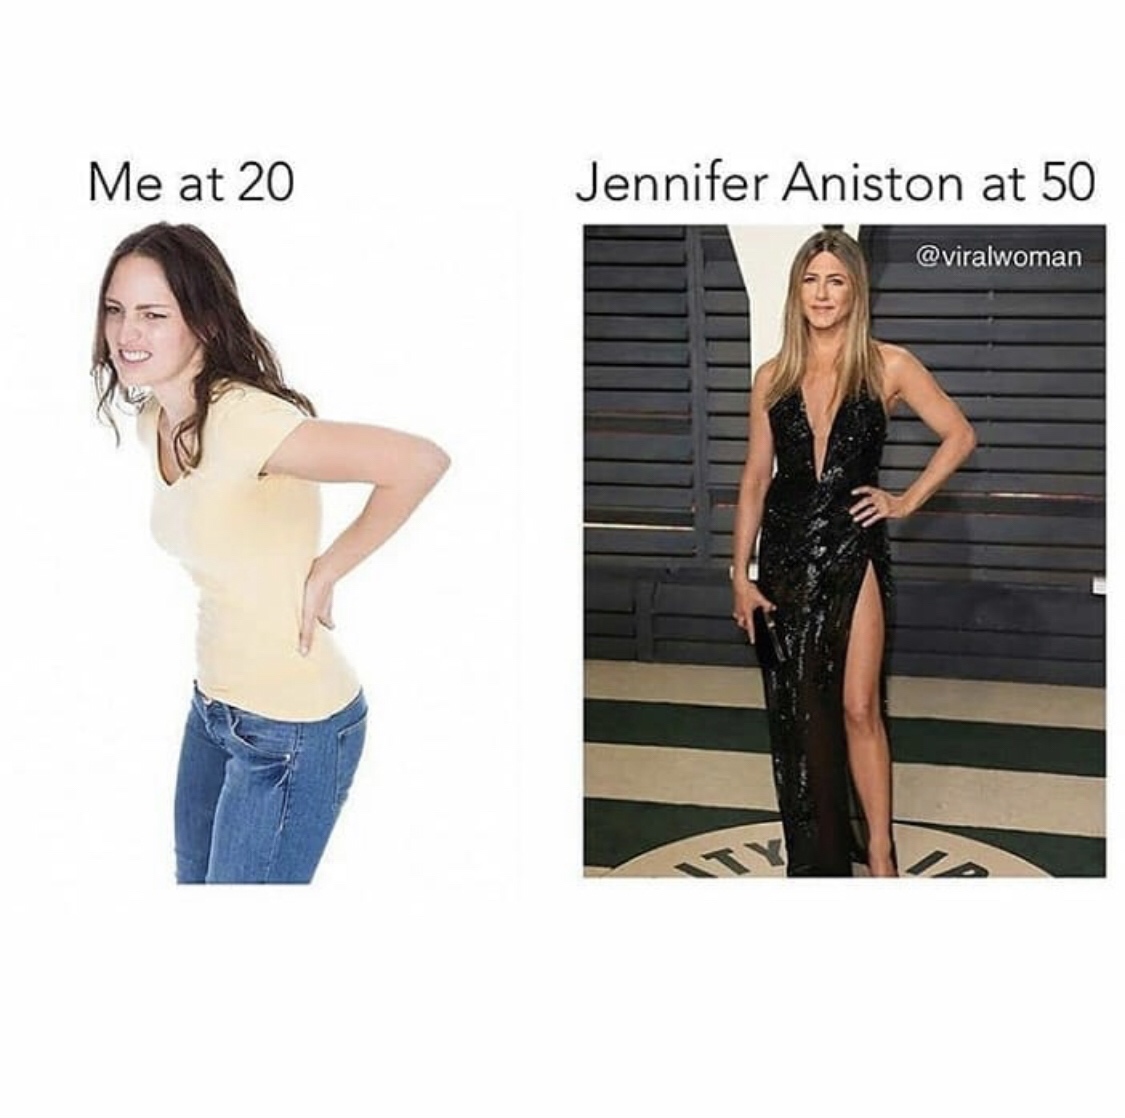 funny memes - Me at 20 Jennifer Aniston at 50